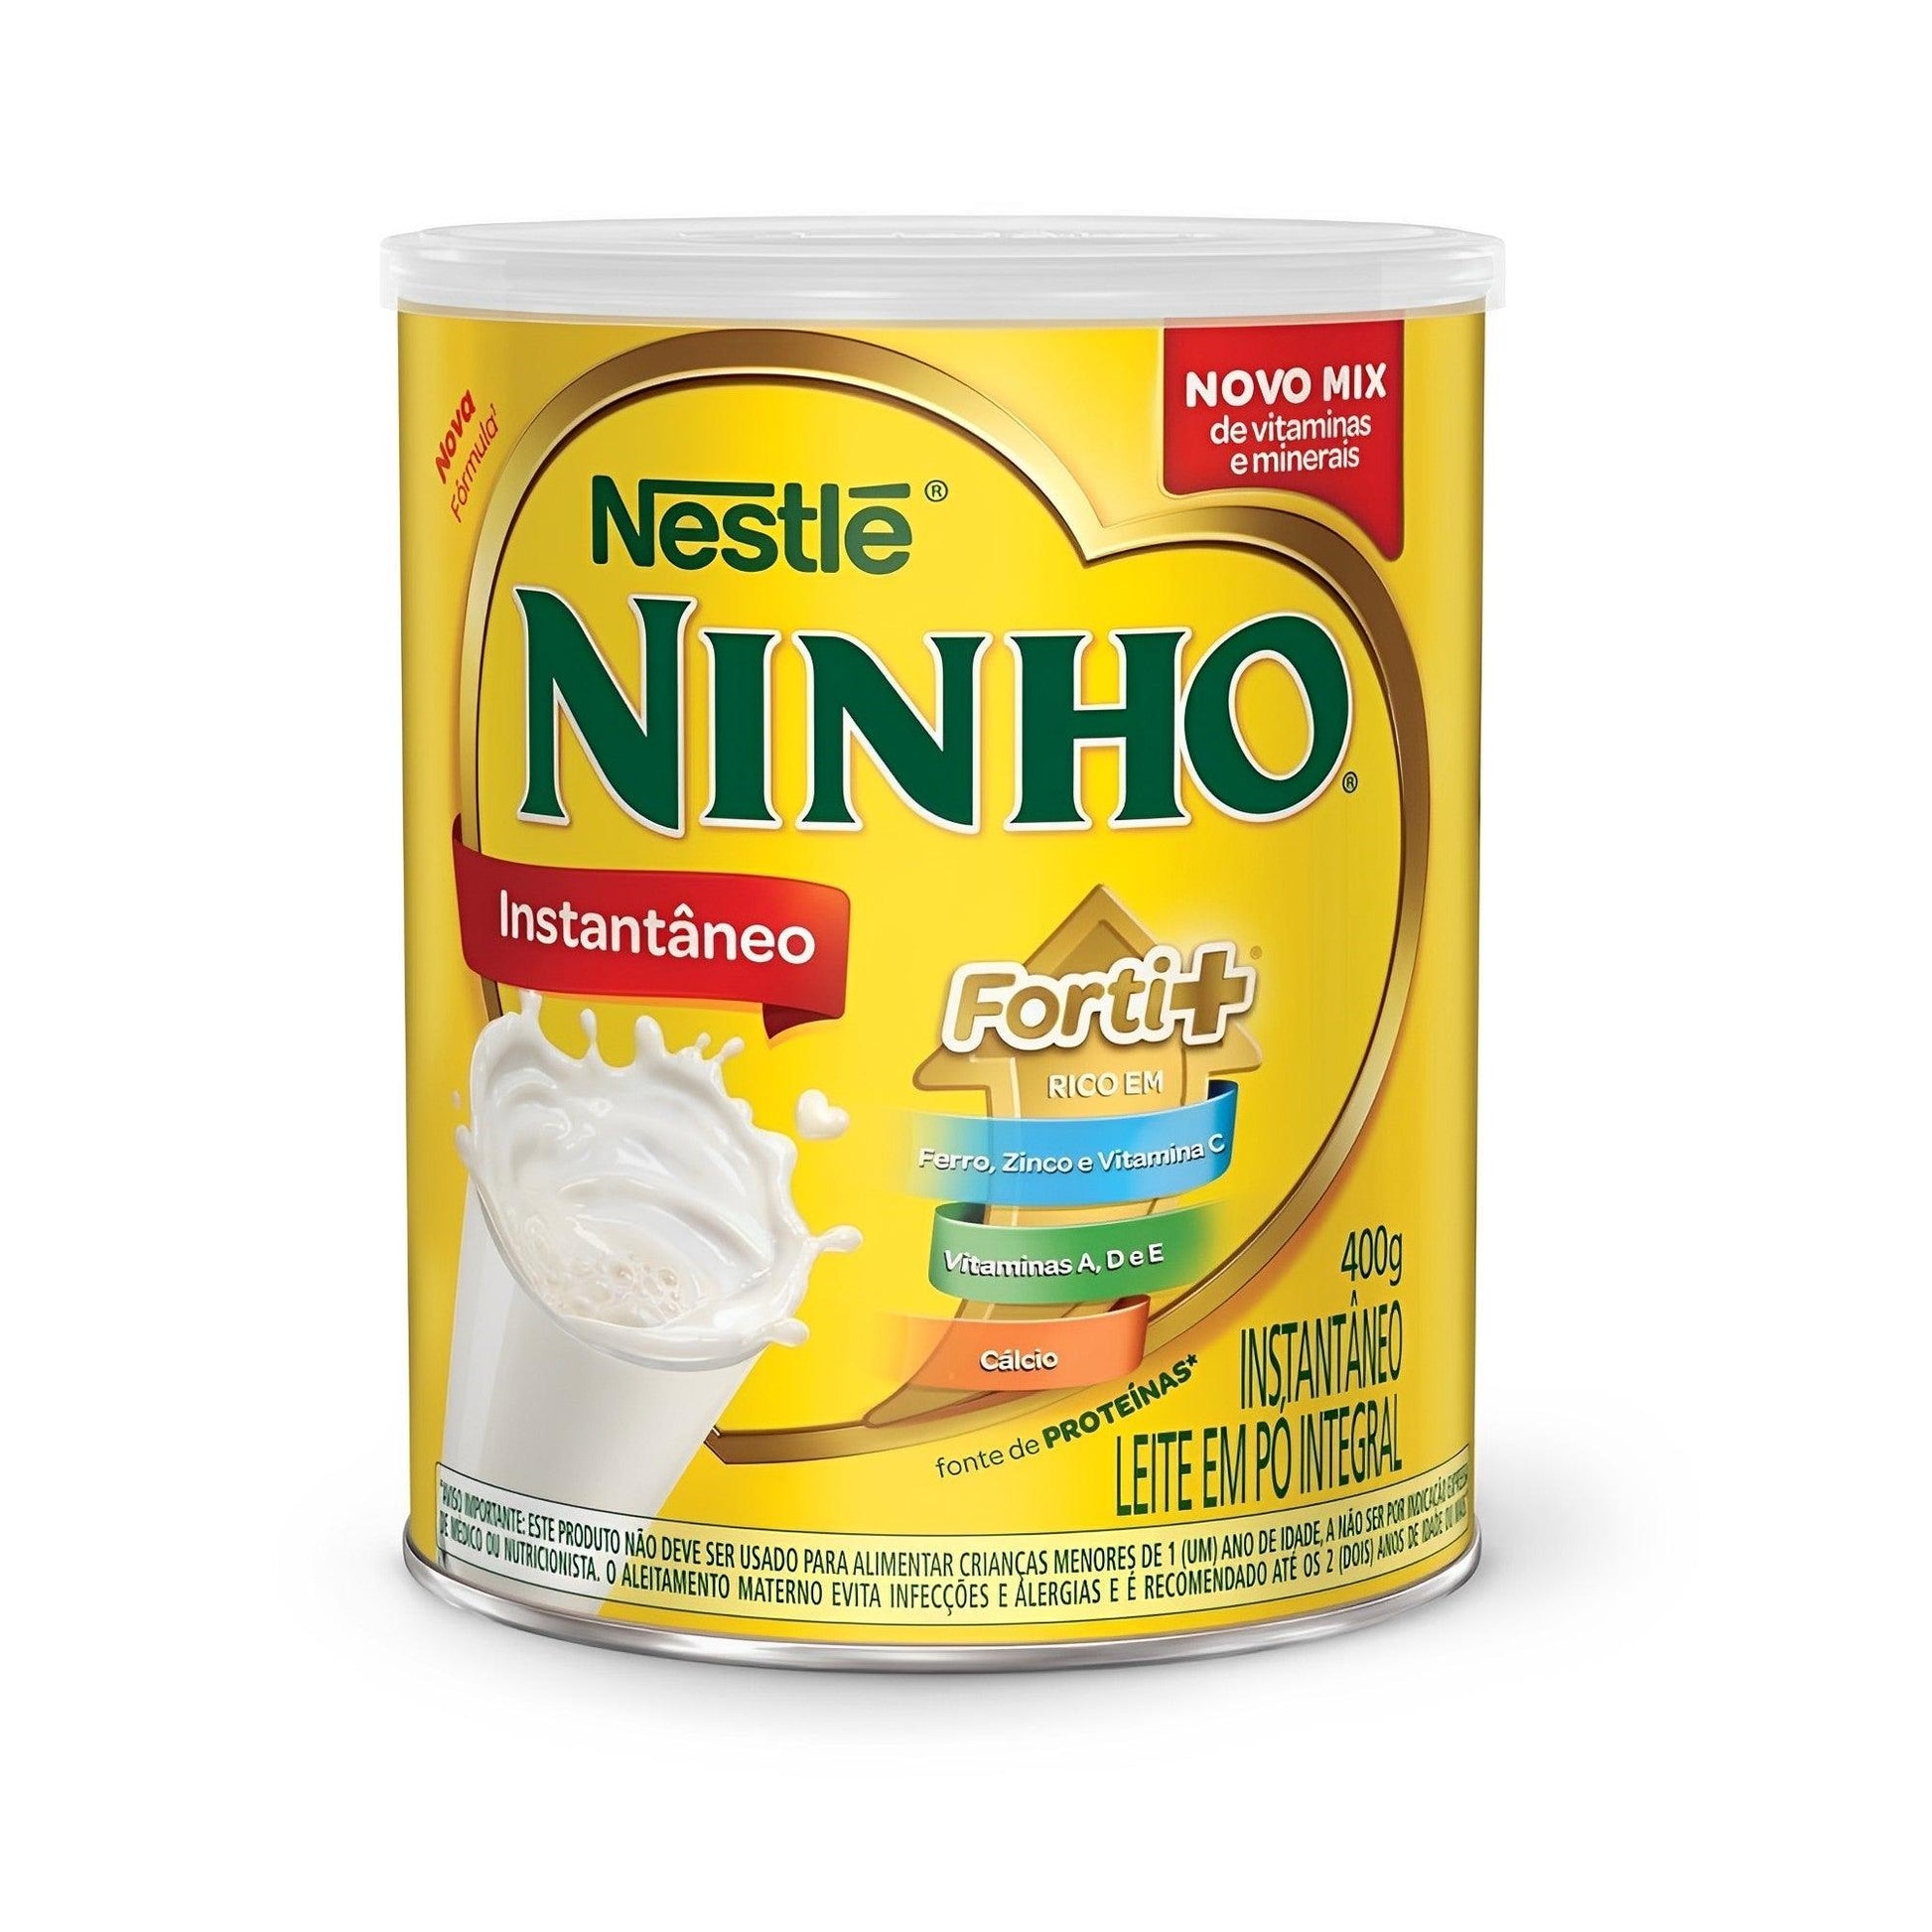 Nestlé Ninho Instant Whole Powdered Milk 14.10 oz. (Pack of 2) - Brazilian Shop